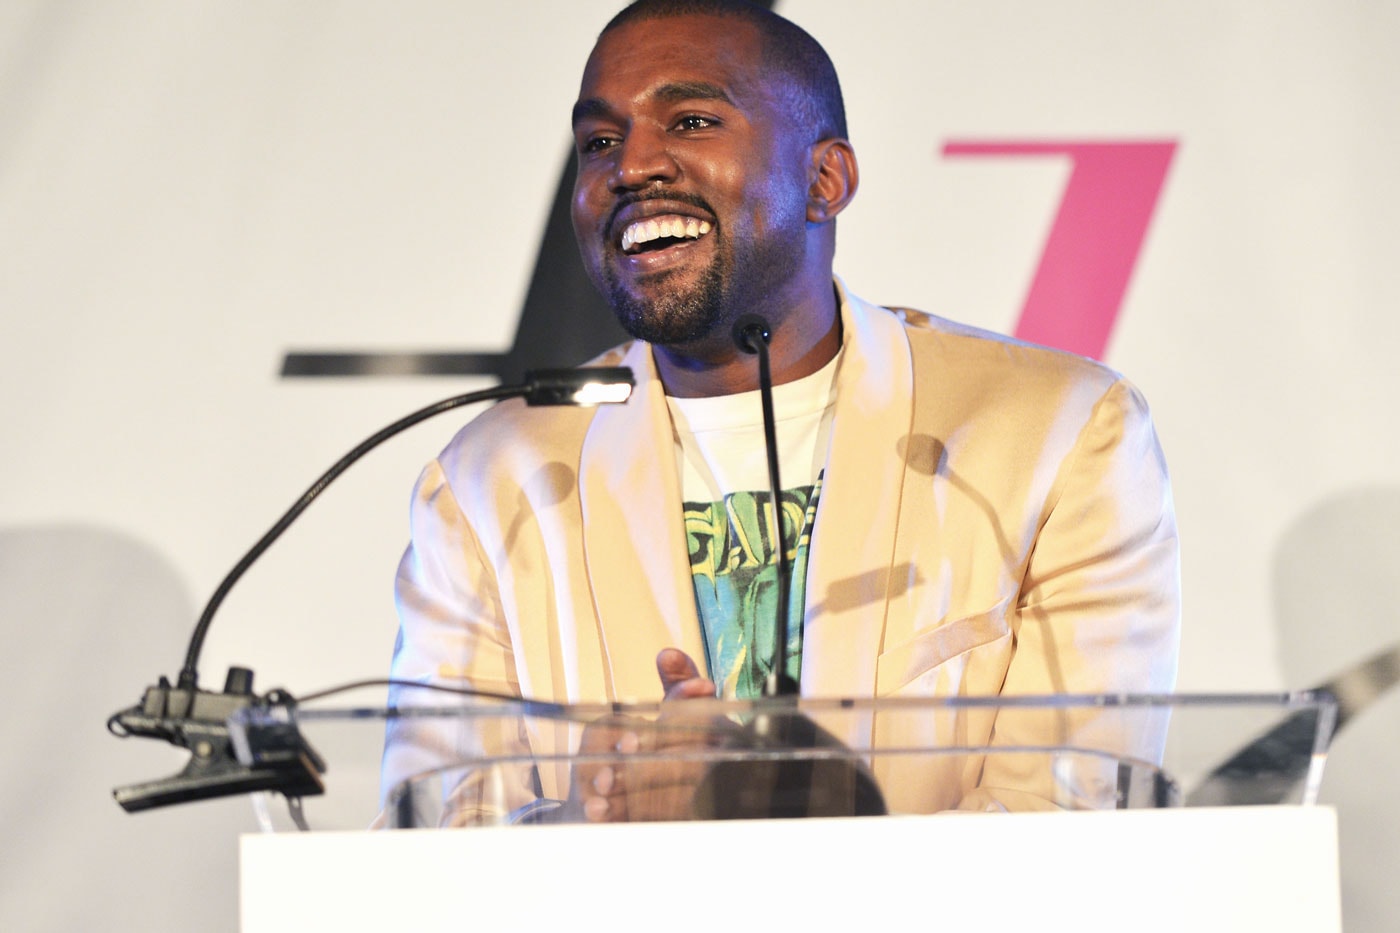 The White House Responds to News of Kanye West's Presidency Bid